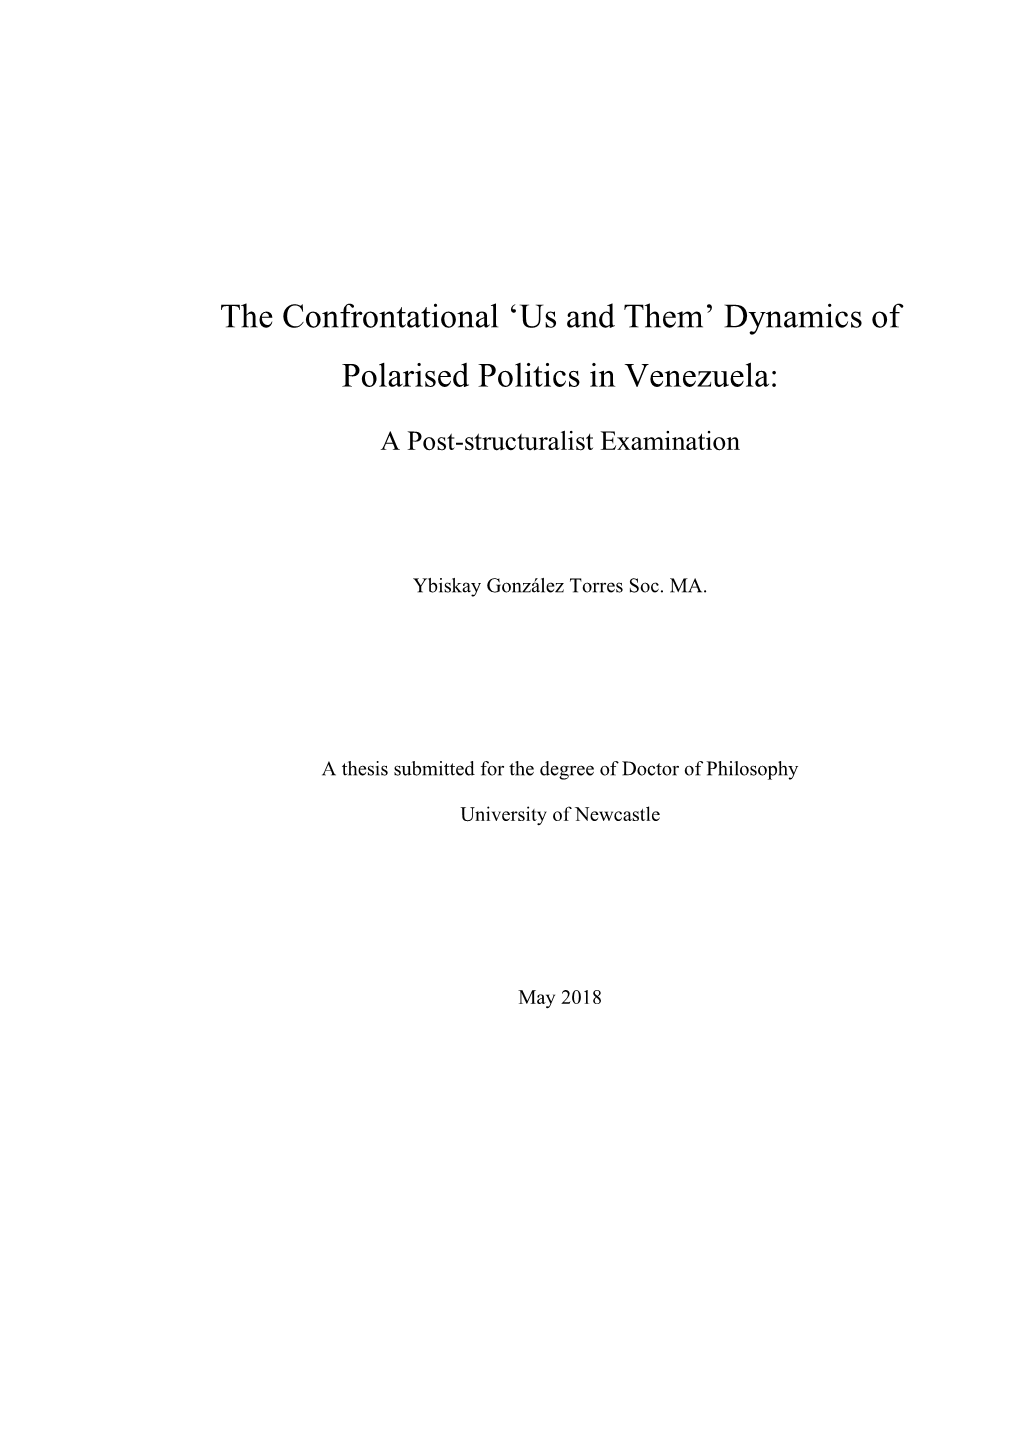 The Confrontational 'Us and Them' Dynamics of Polarised Politics in Venezuela